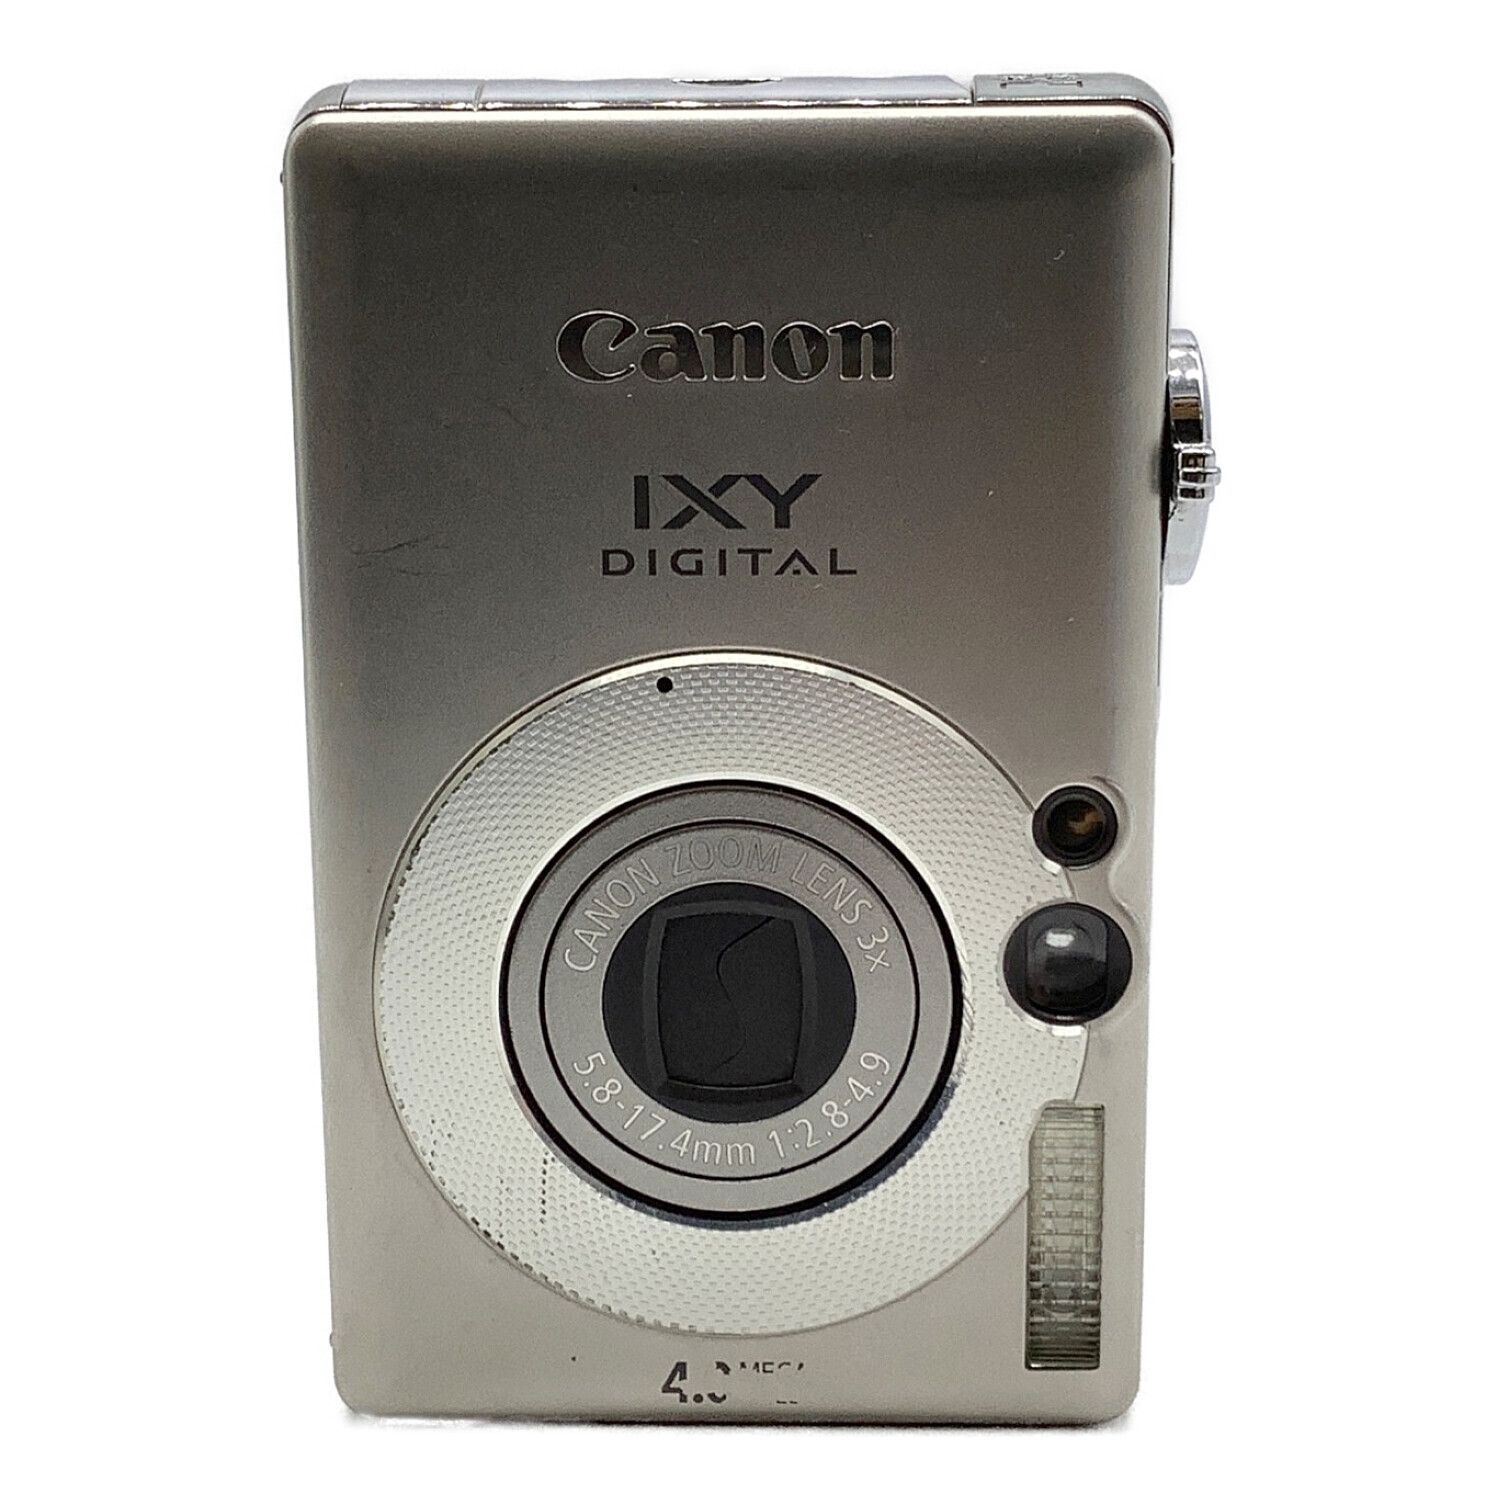 CANON キャノン デジタルカメラ キズ有 IXY DEGITAL